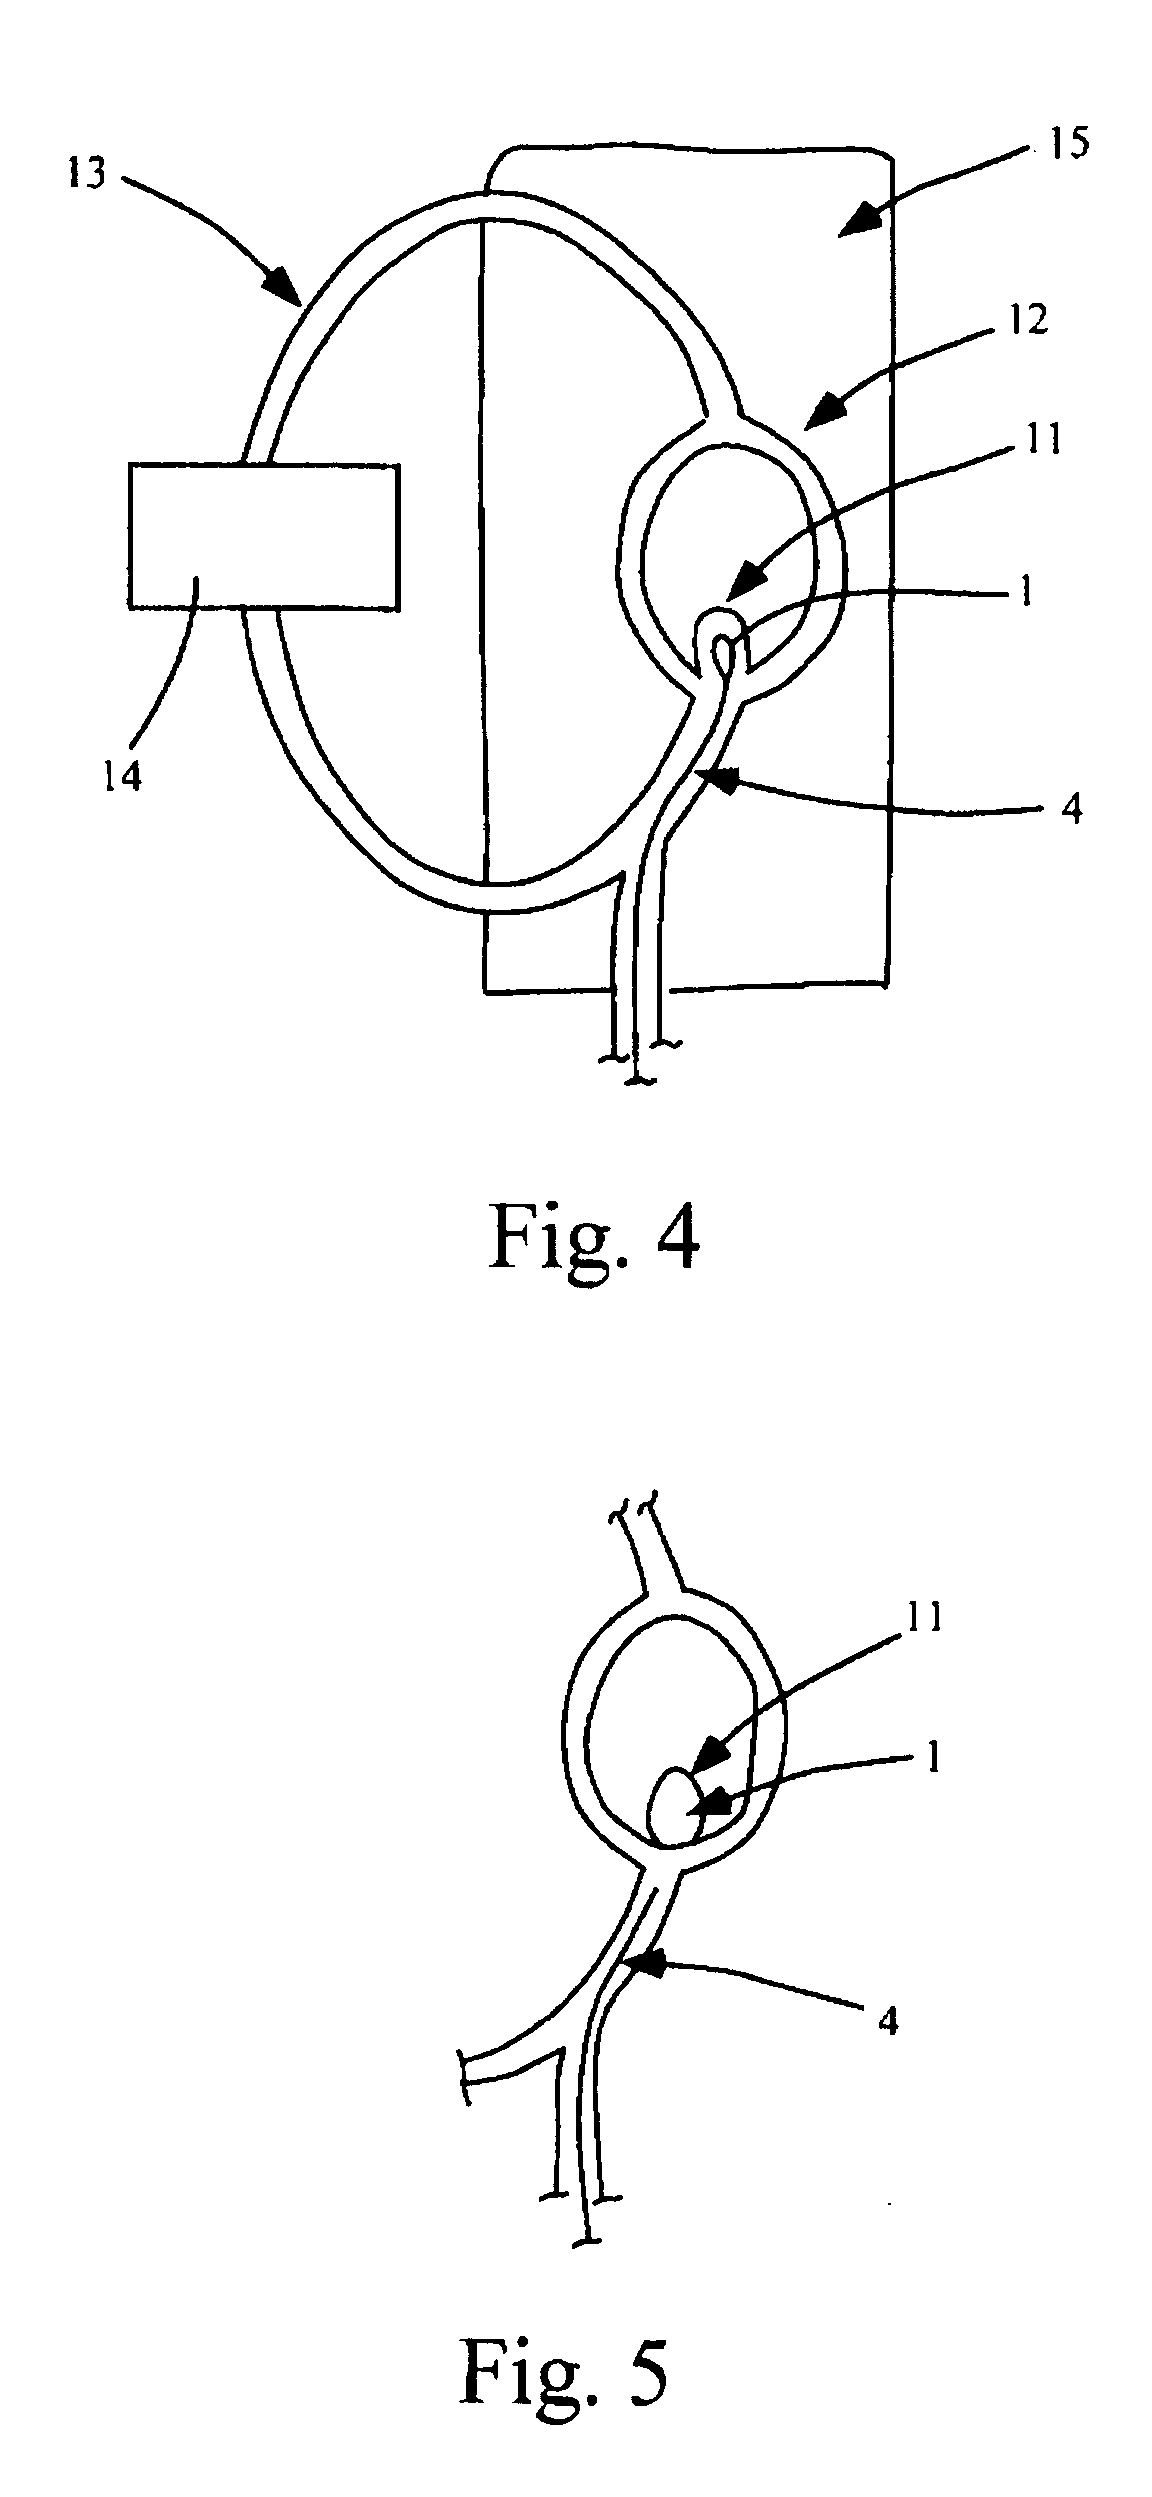 Aneurysm treatment using semi-compliant balloon